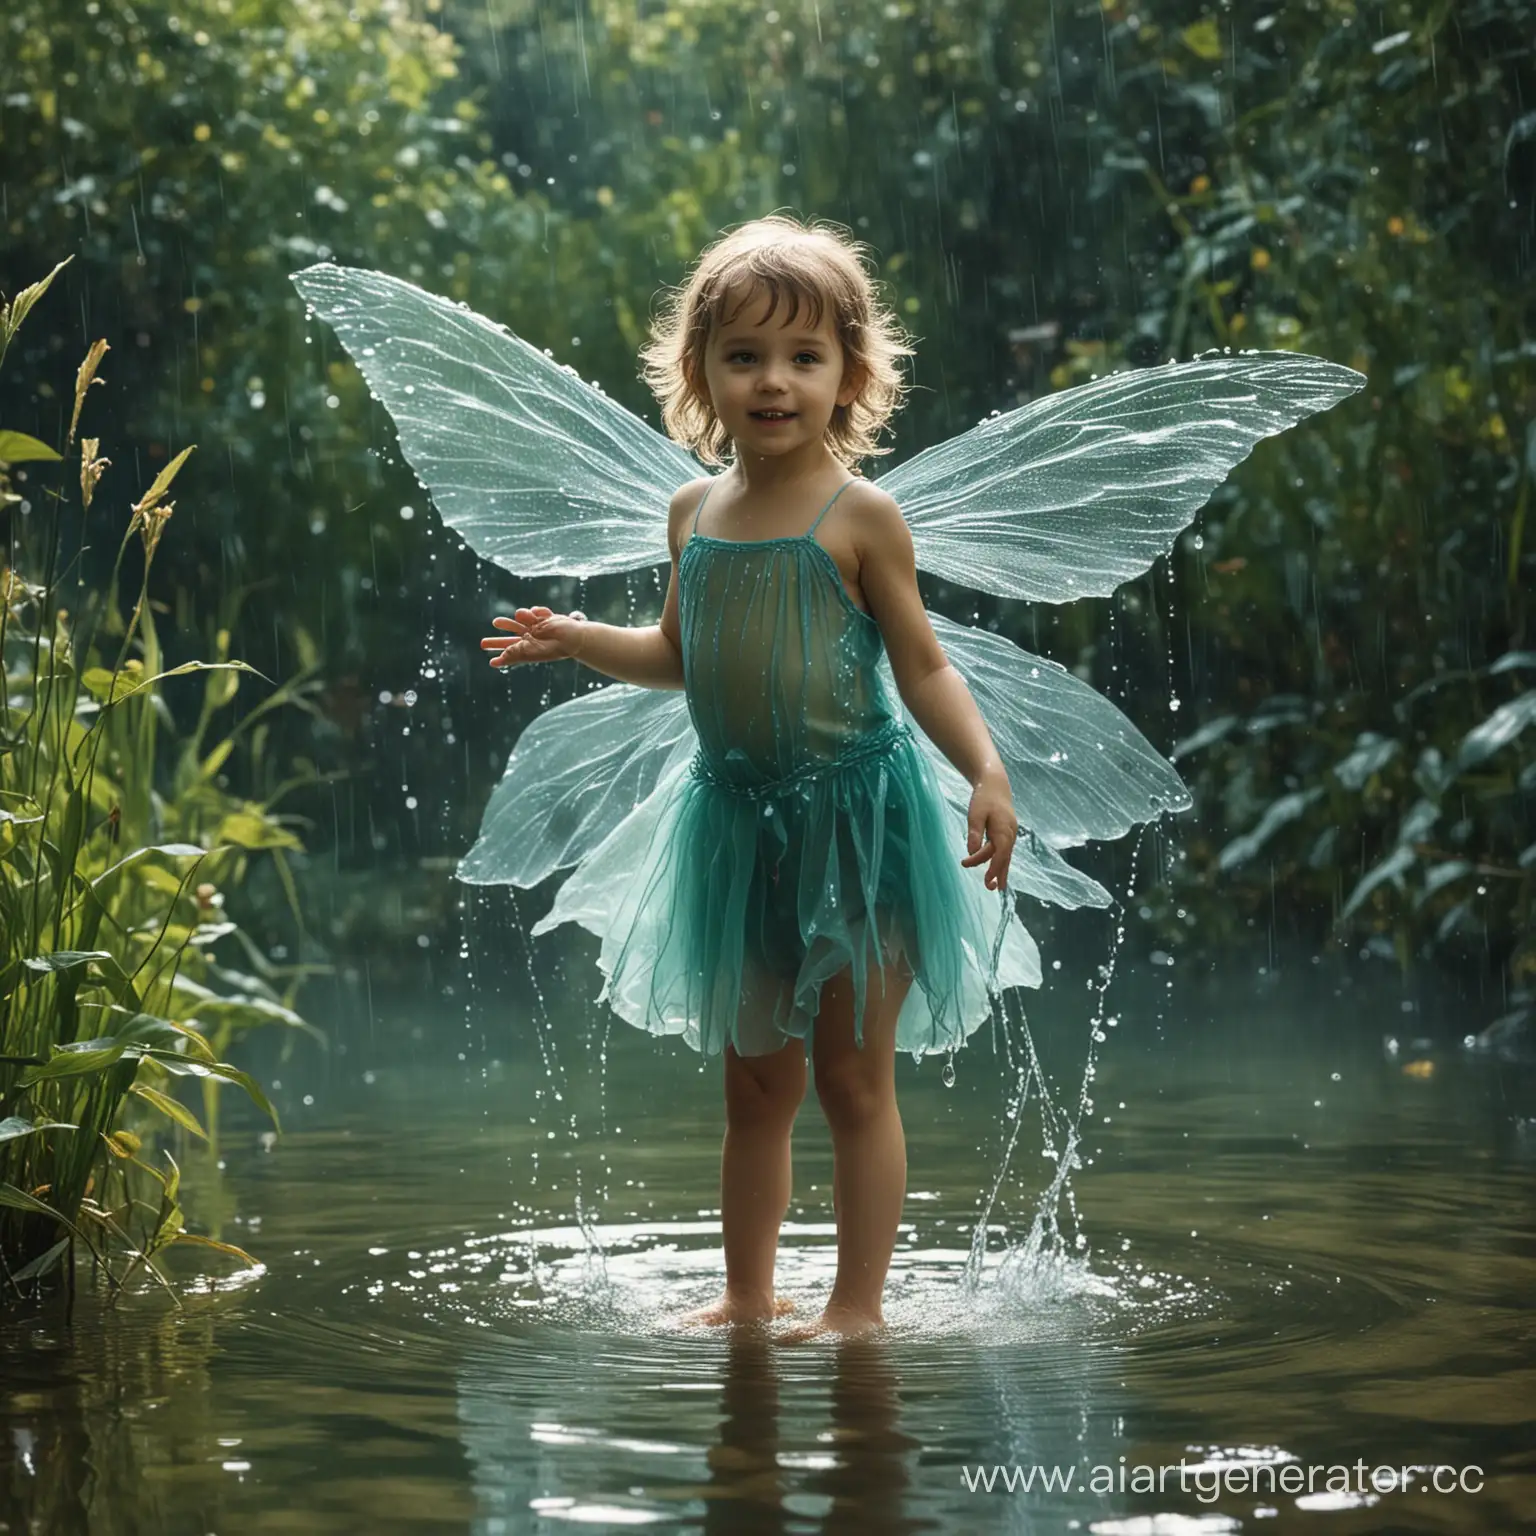 Enchanting-Water-Fairy-Revisits-Childhood-Wonder